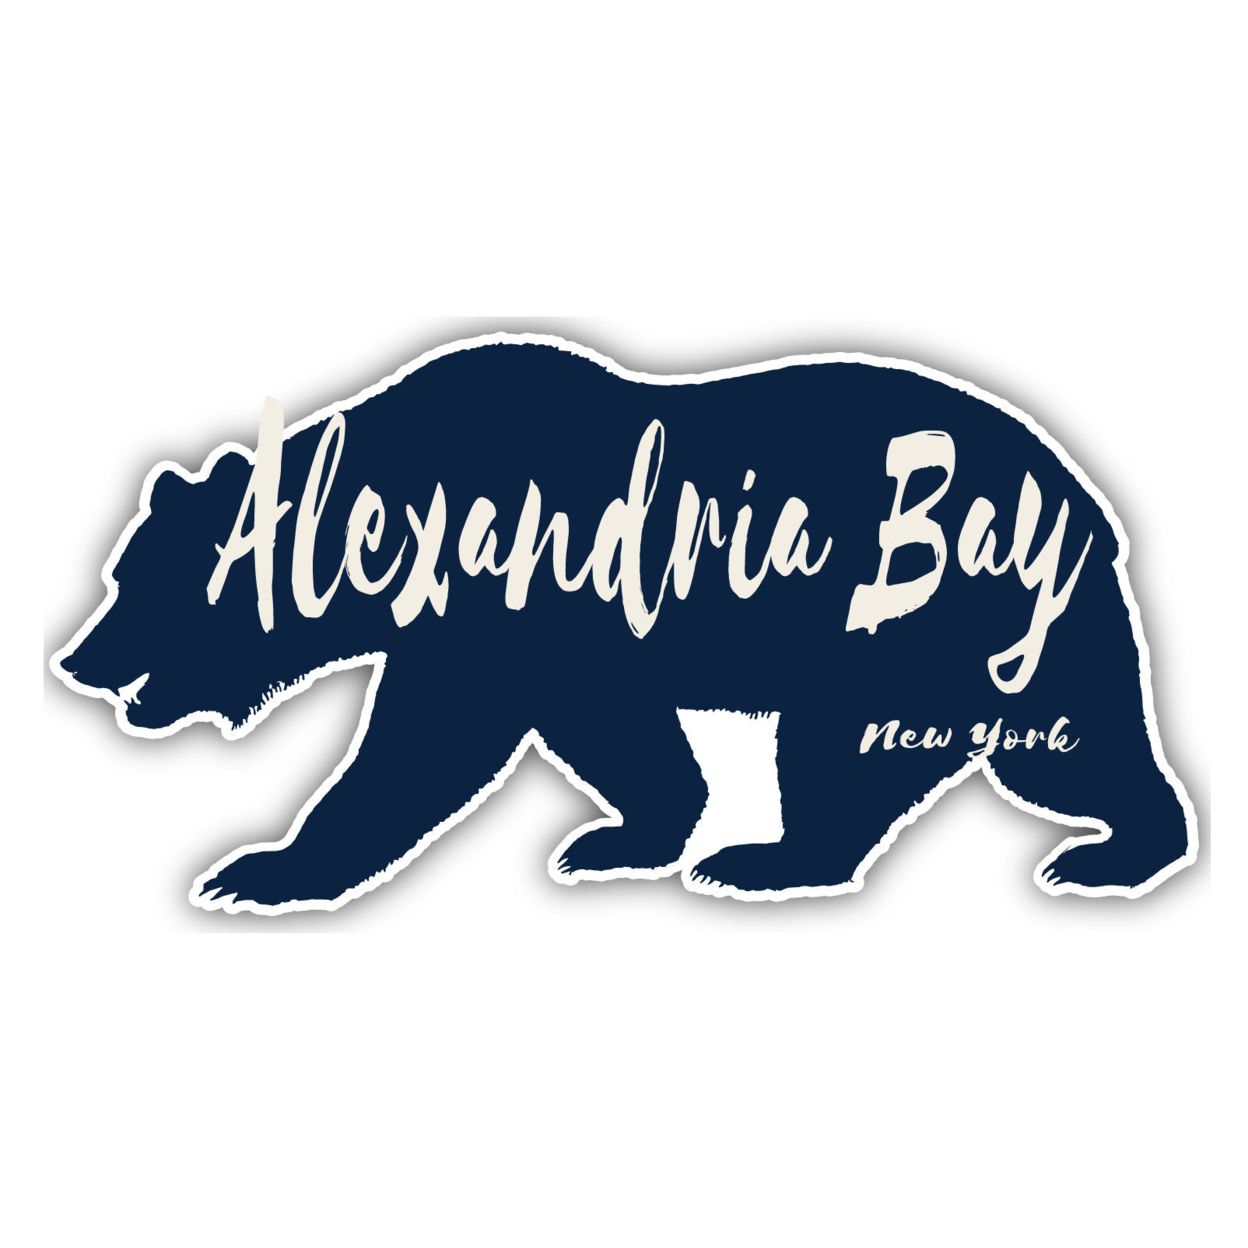 Alexandria Bay New York Souvenir Decorative Stickers (Choose Theme And Size) - Single Unit, 4-Inch, Adventures Awaits